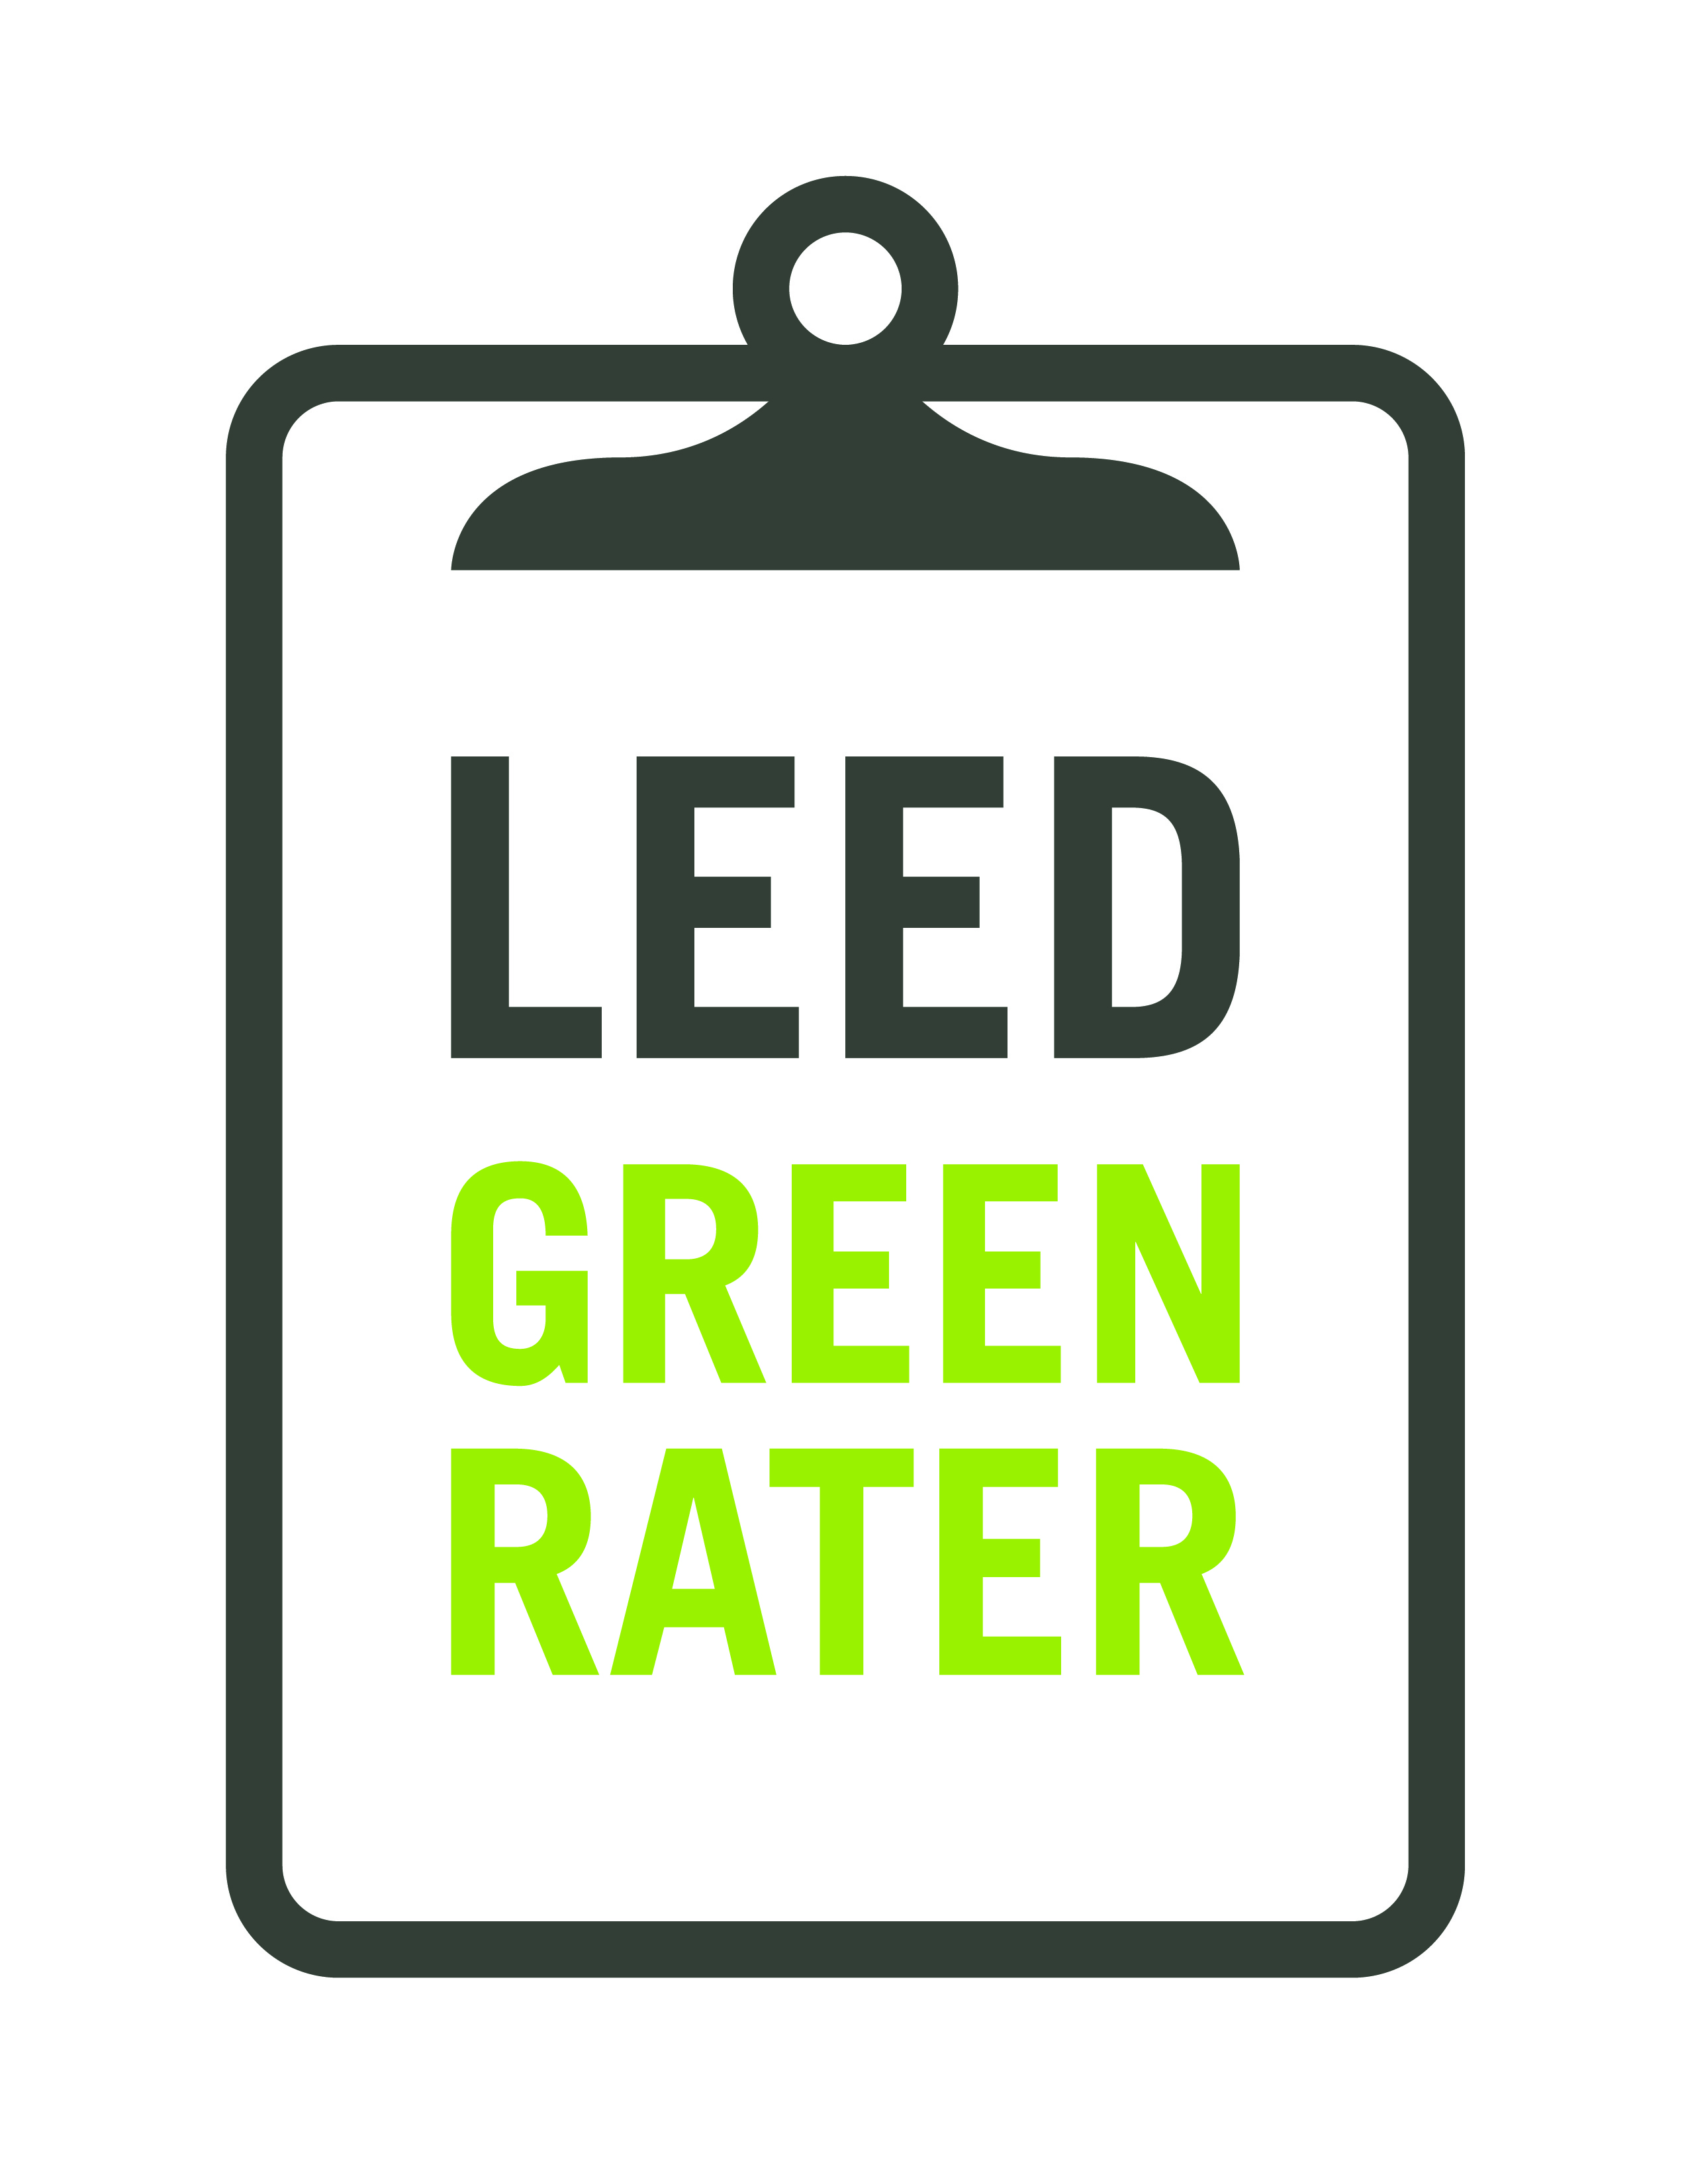 LEED Green Rater logo